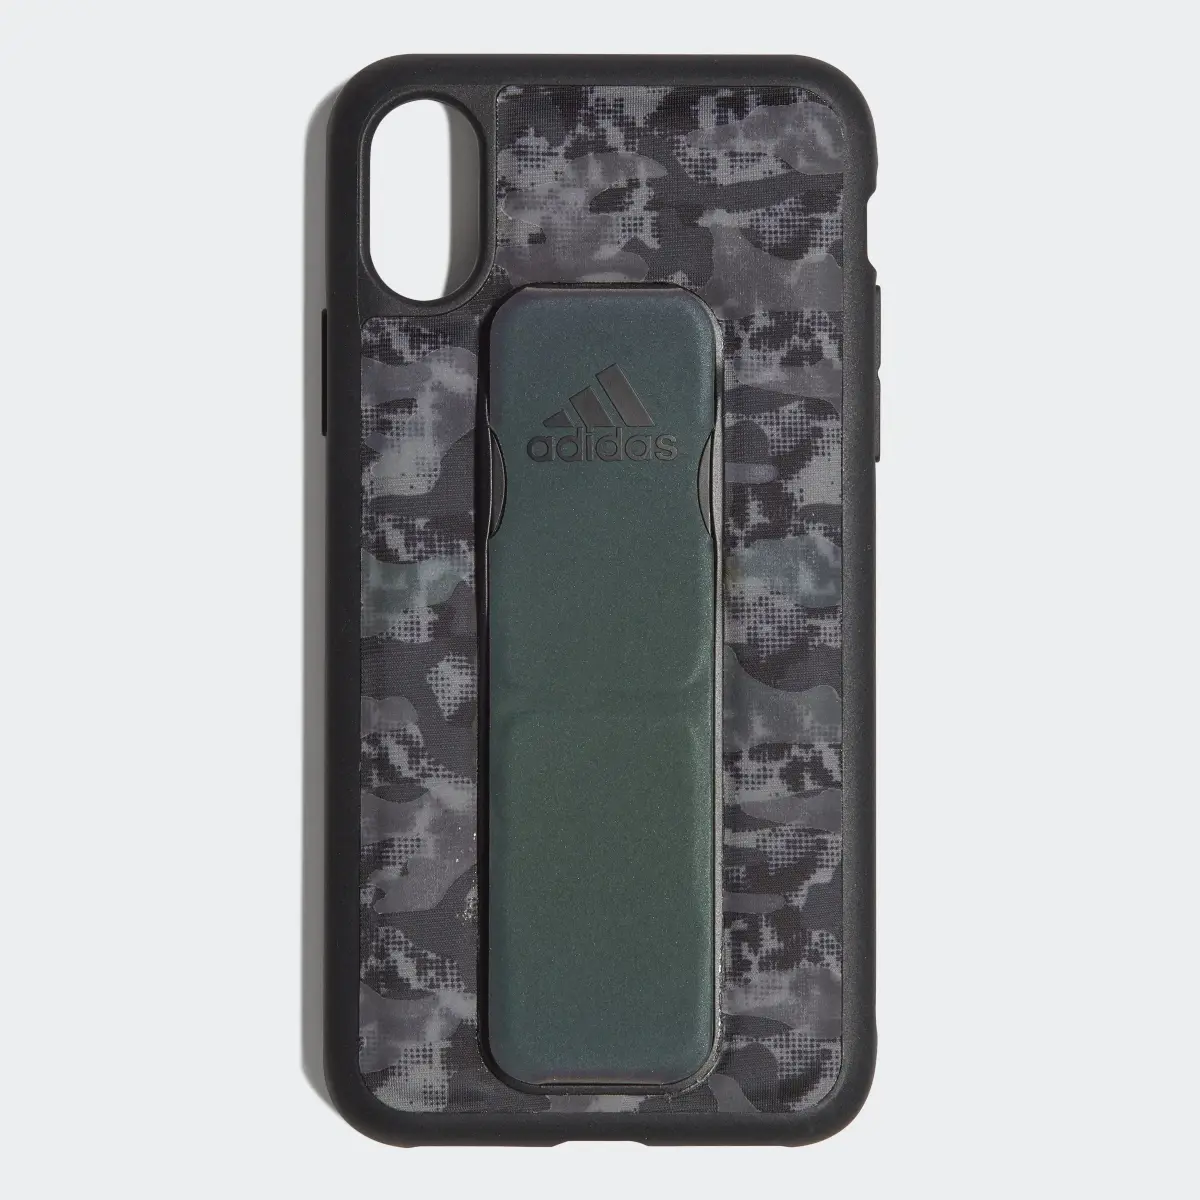 Adidas Grip Case iPhone X. 1